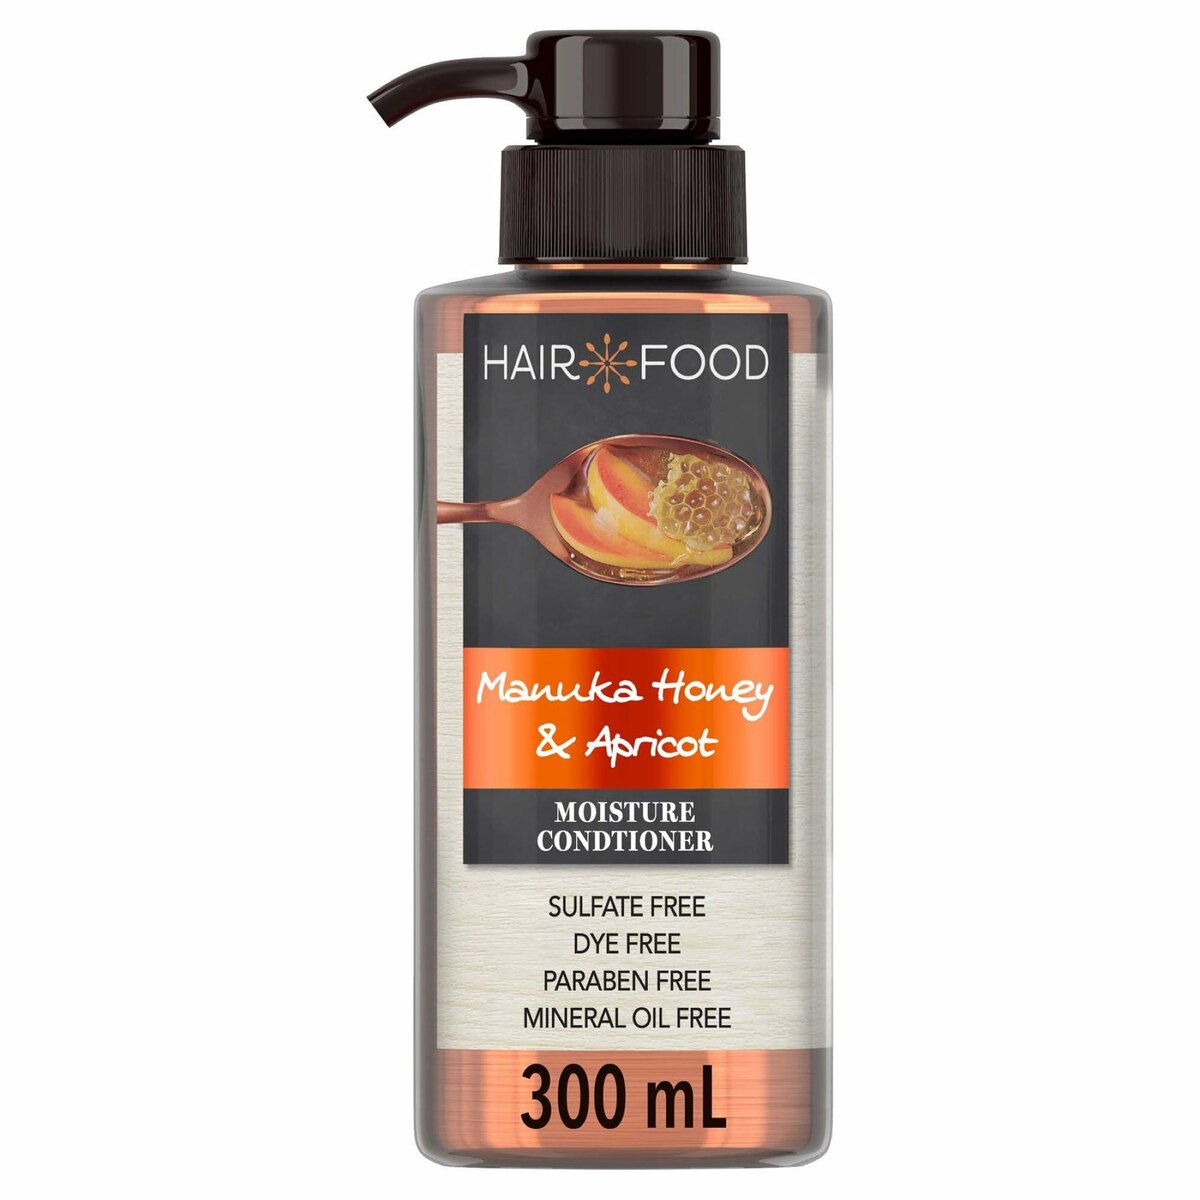 Hair Food Moisture Conditioner Manuka Honey & Apricot 300ml